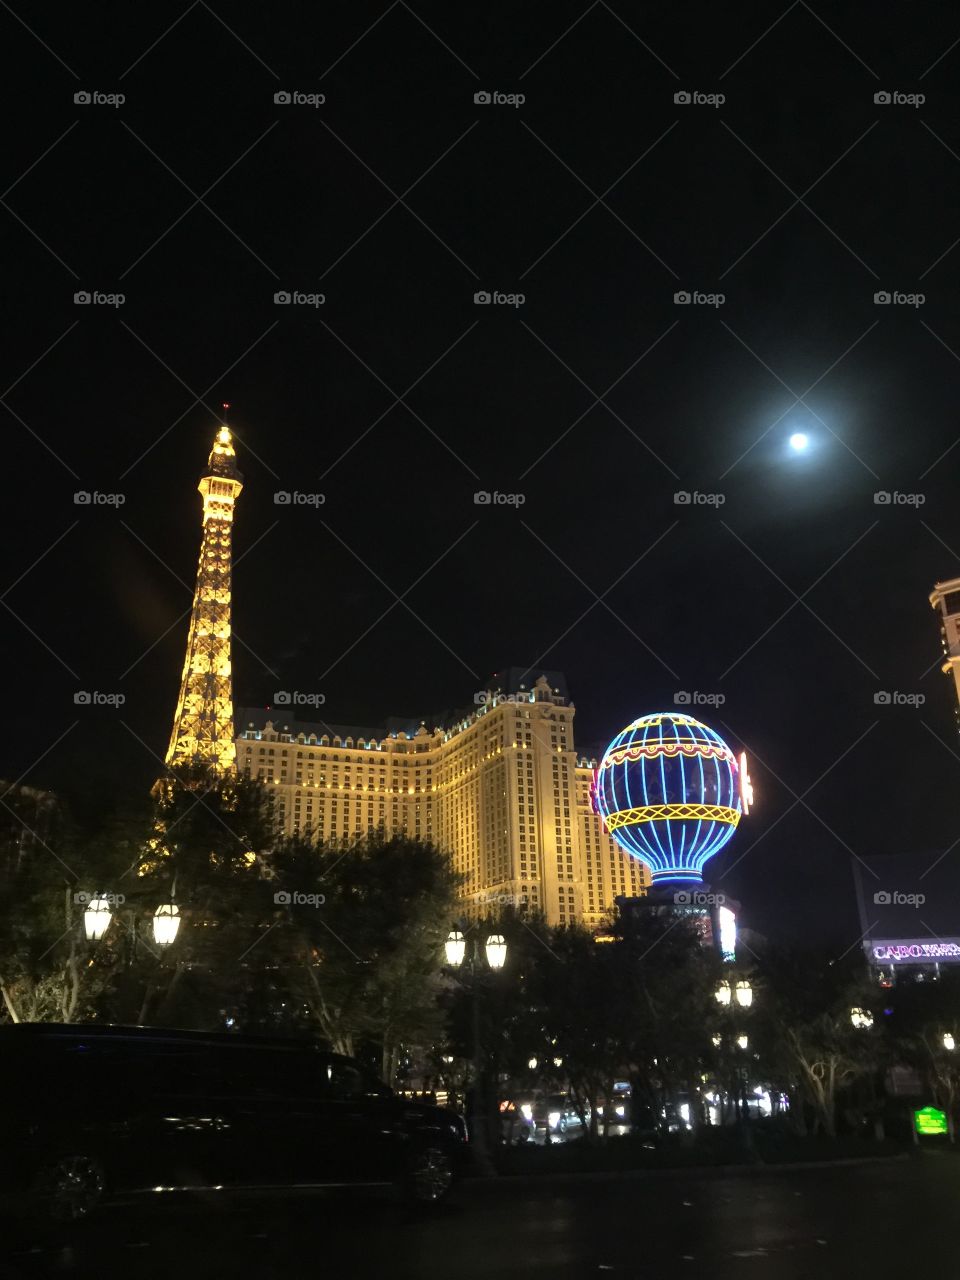 Vegas
Paris
Eiffel tower